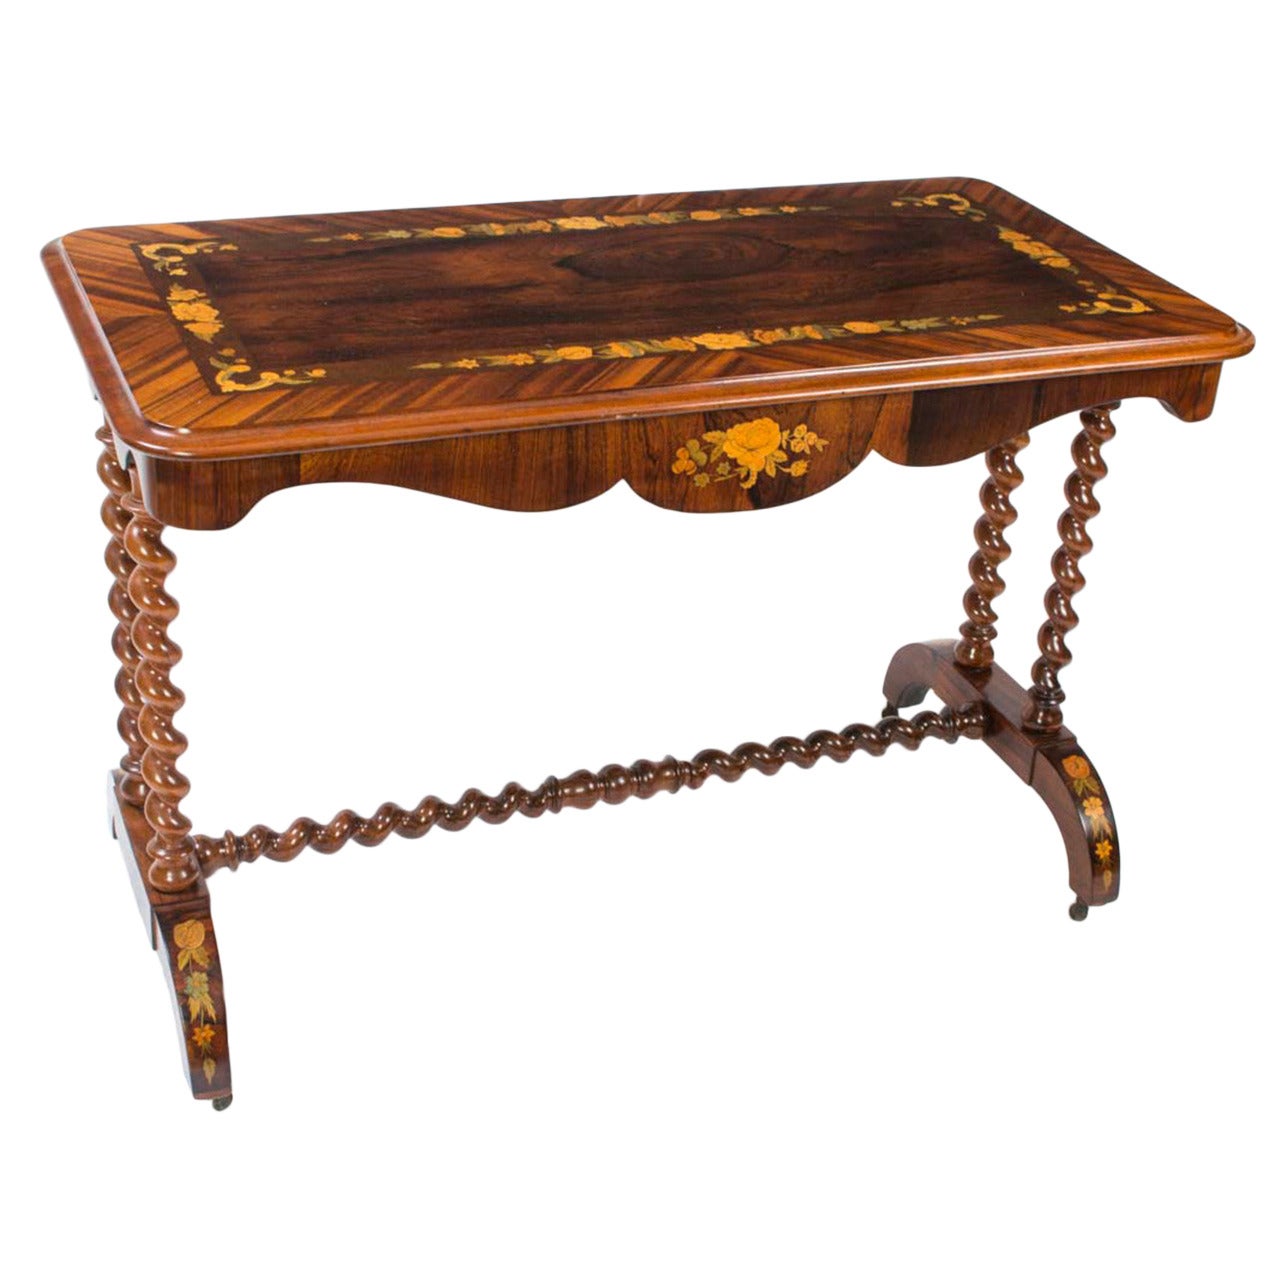 Antique Victorian Inlaid Marquetry Sofa Table c.1860